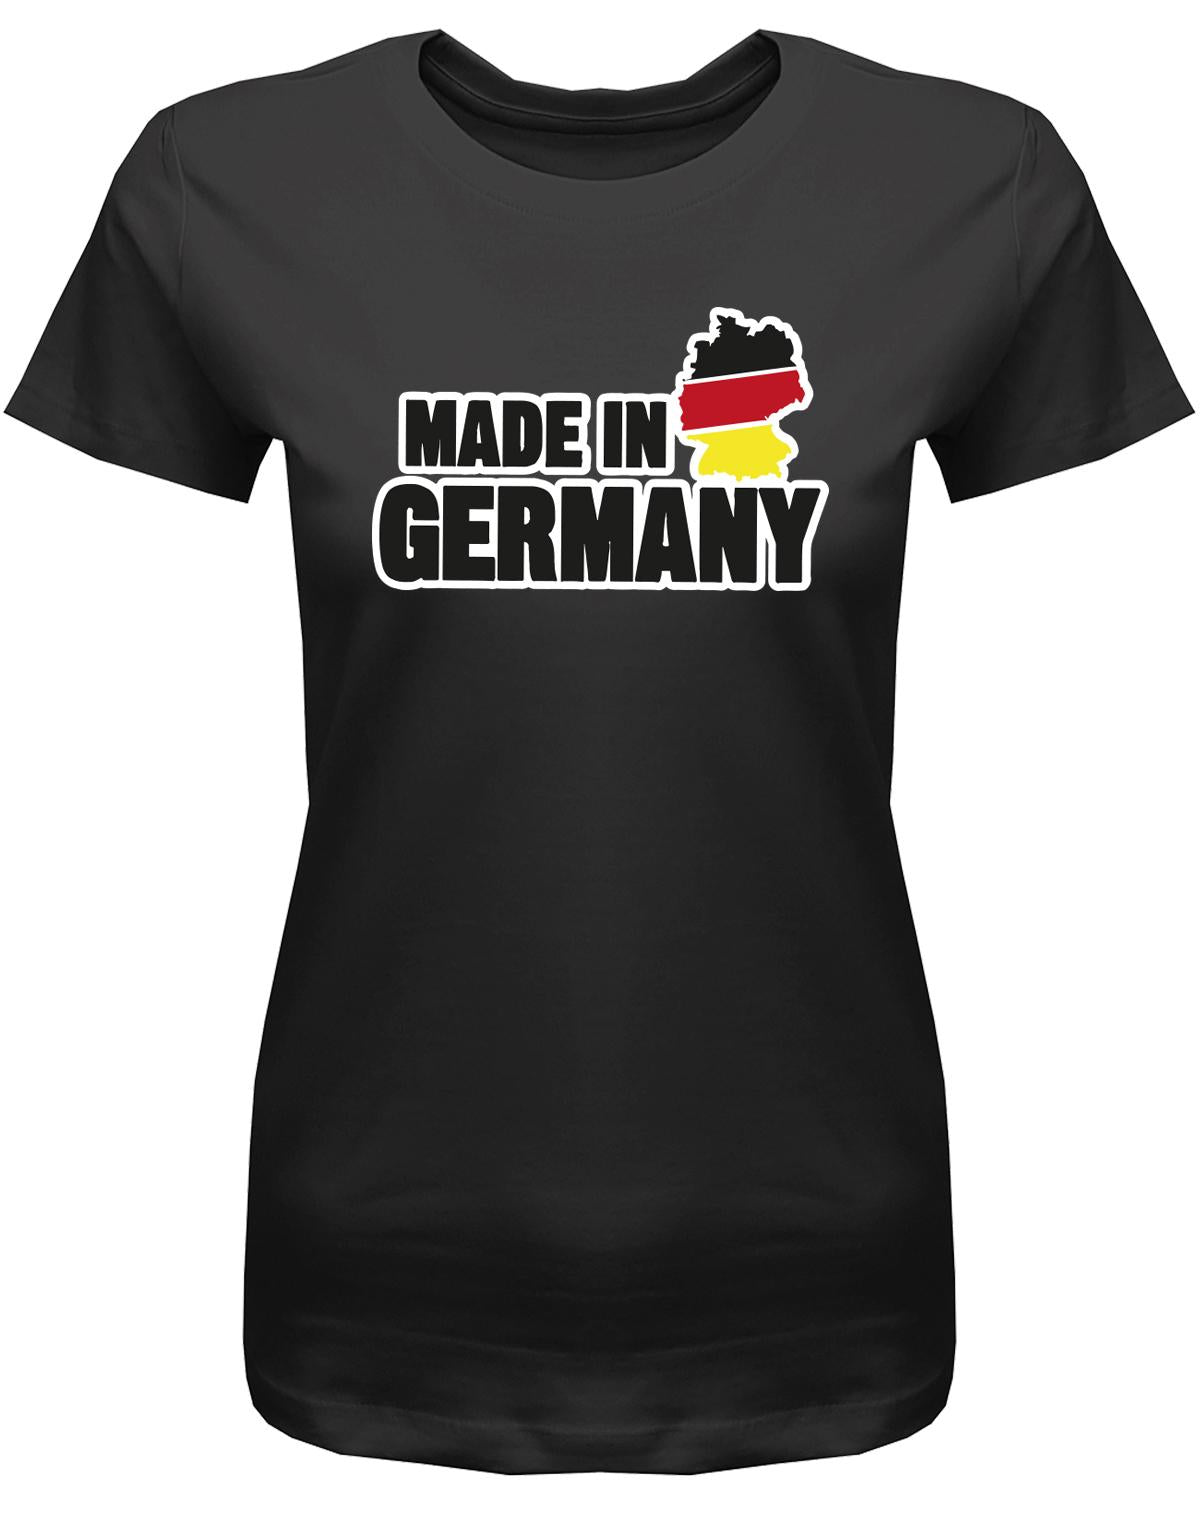 MAde-in-germany-Damen-Shirt-Schwarz